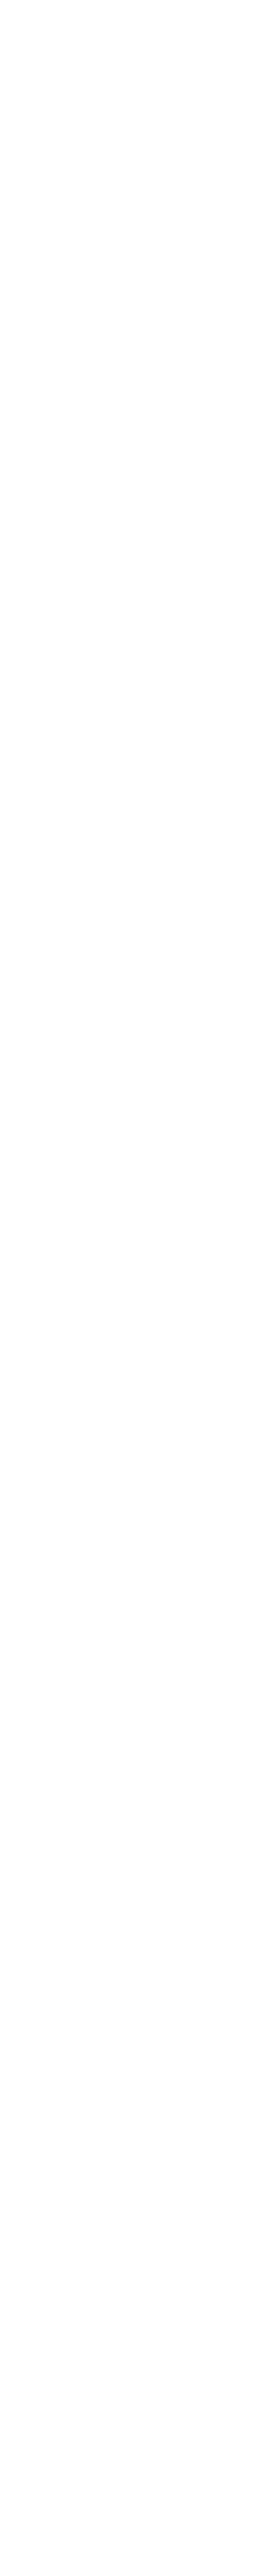 Penn Law Journal logo